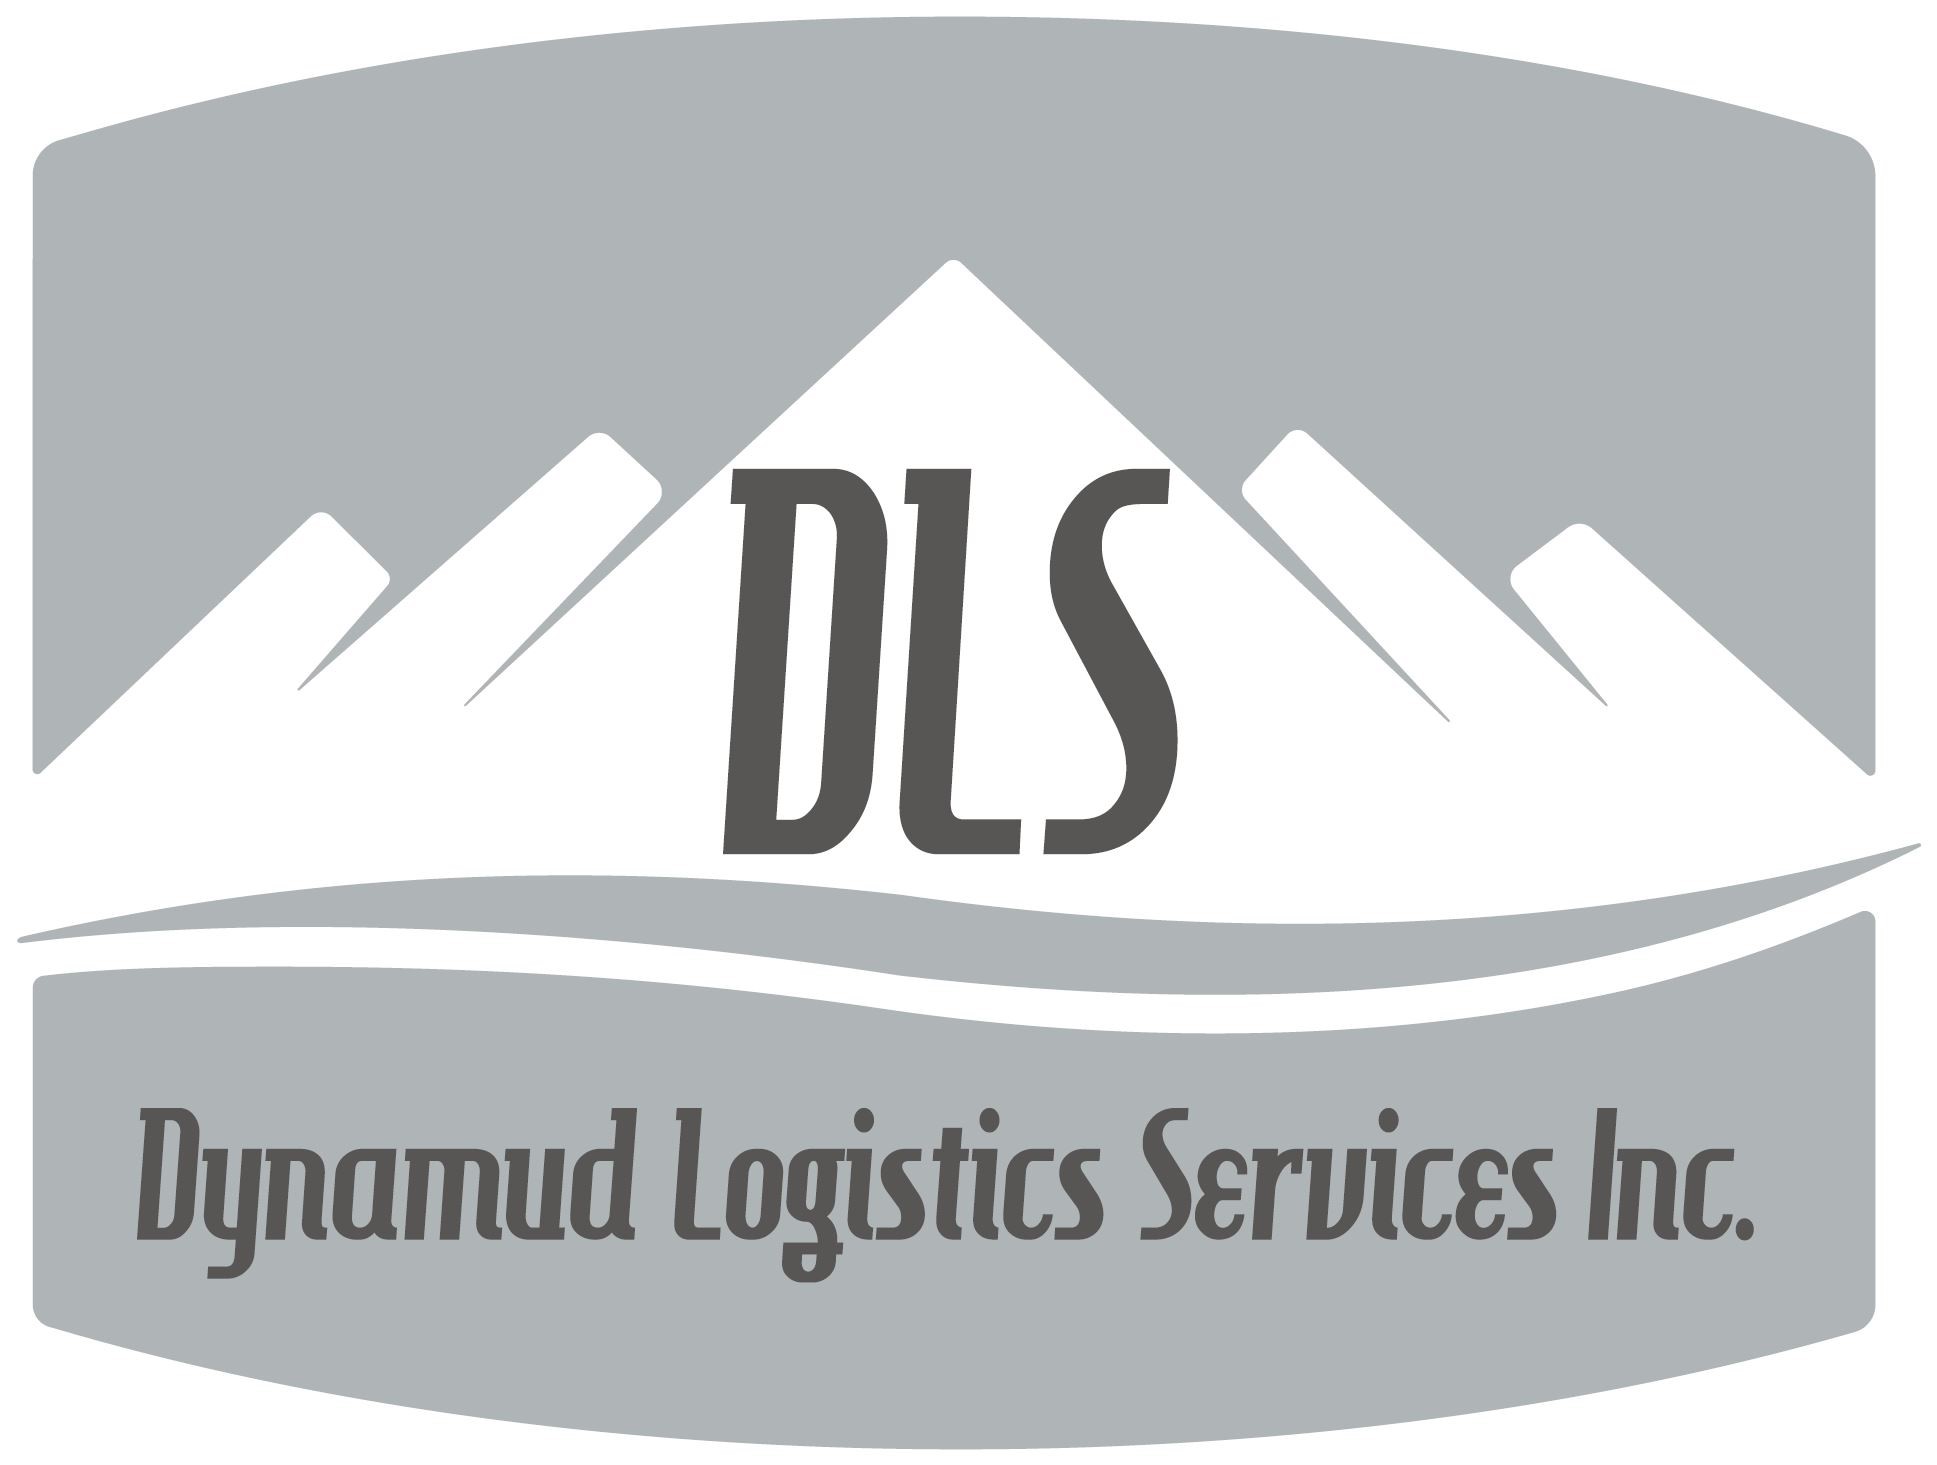 Dynamud Logistics